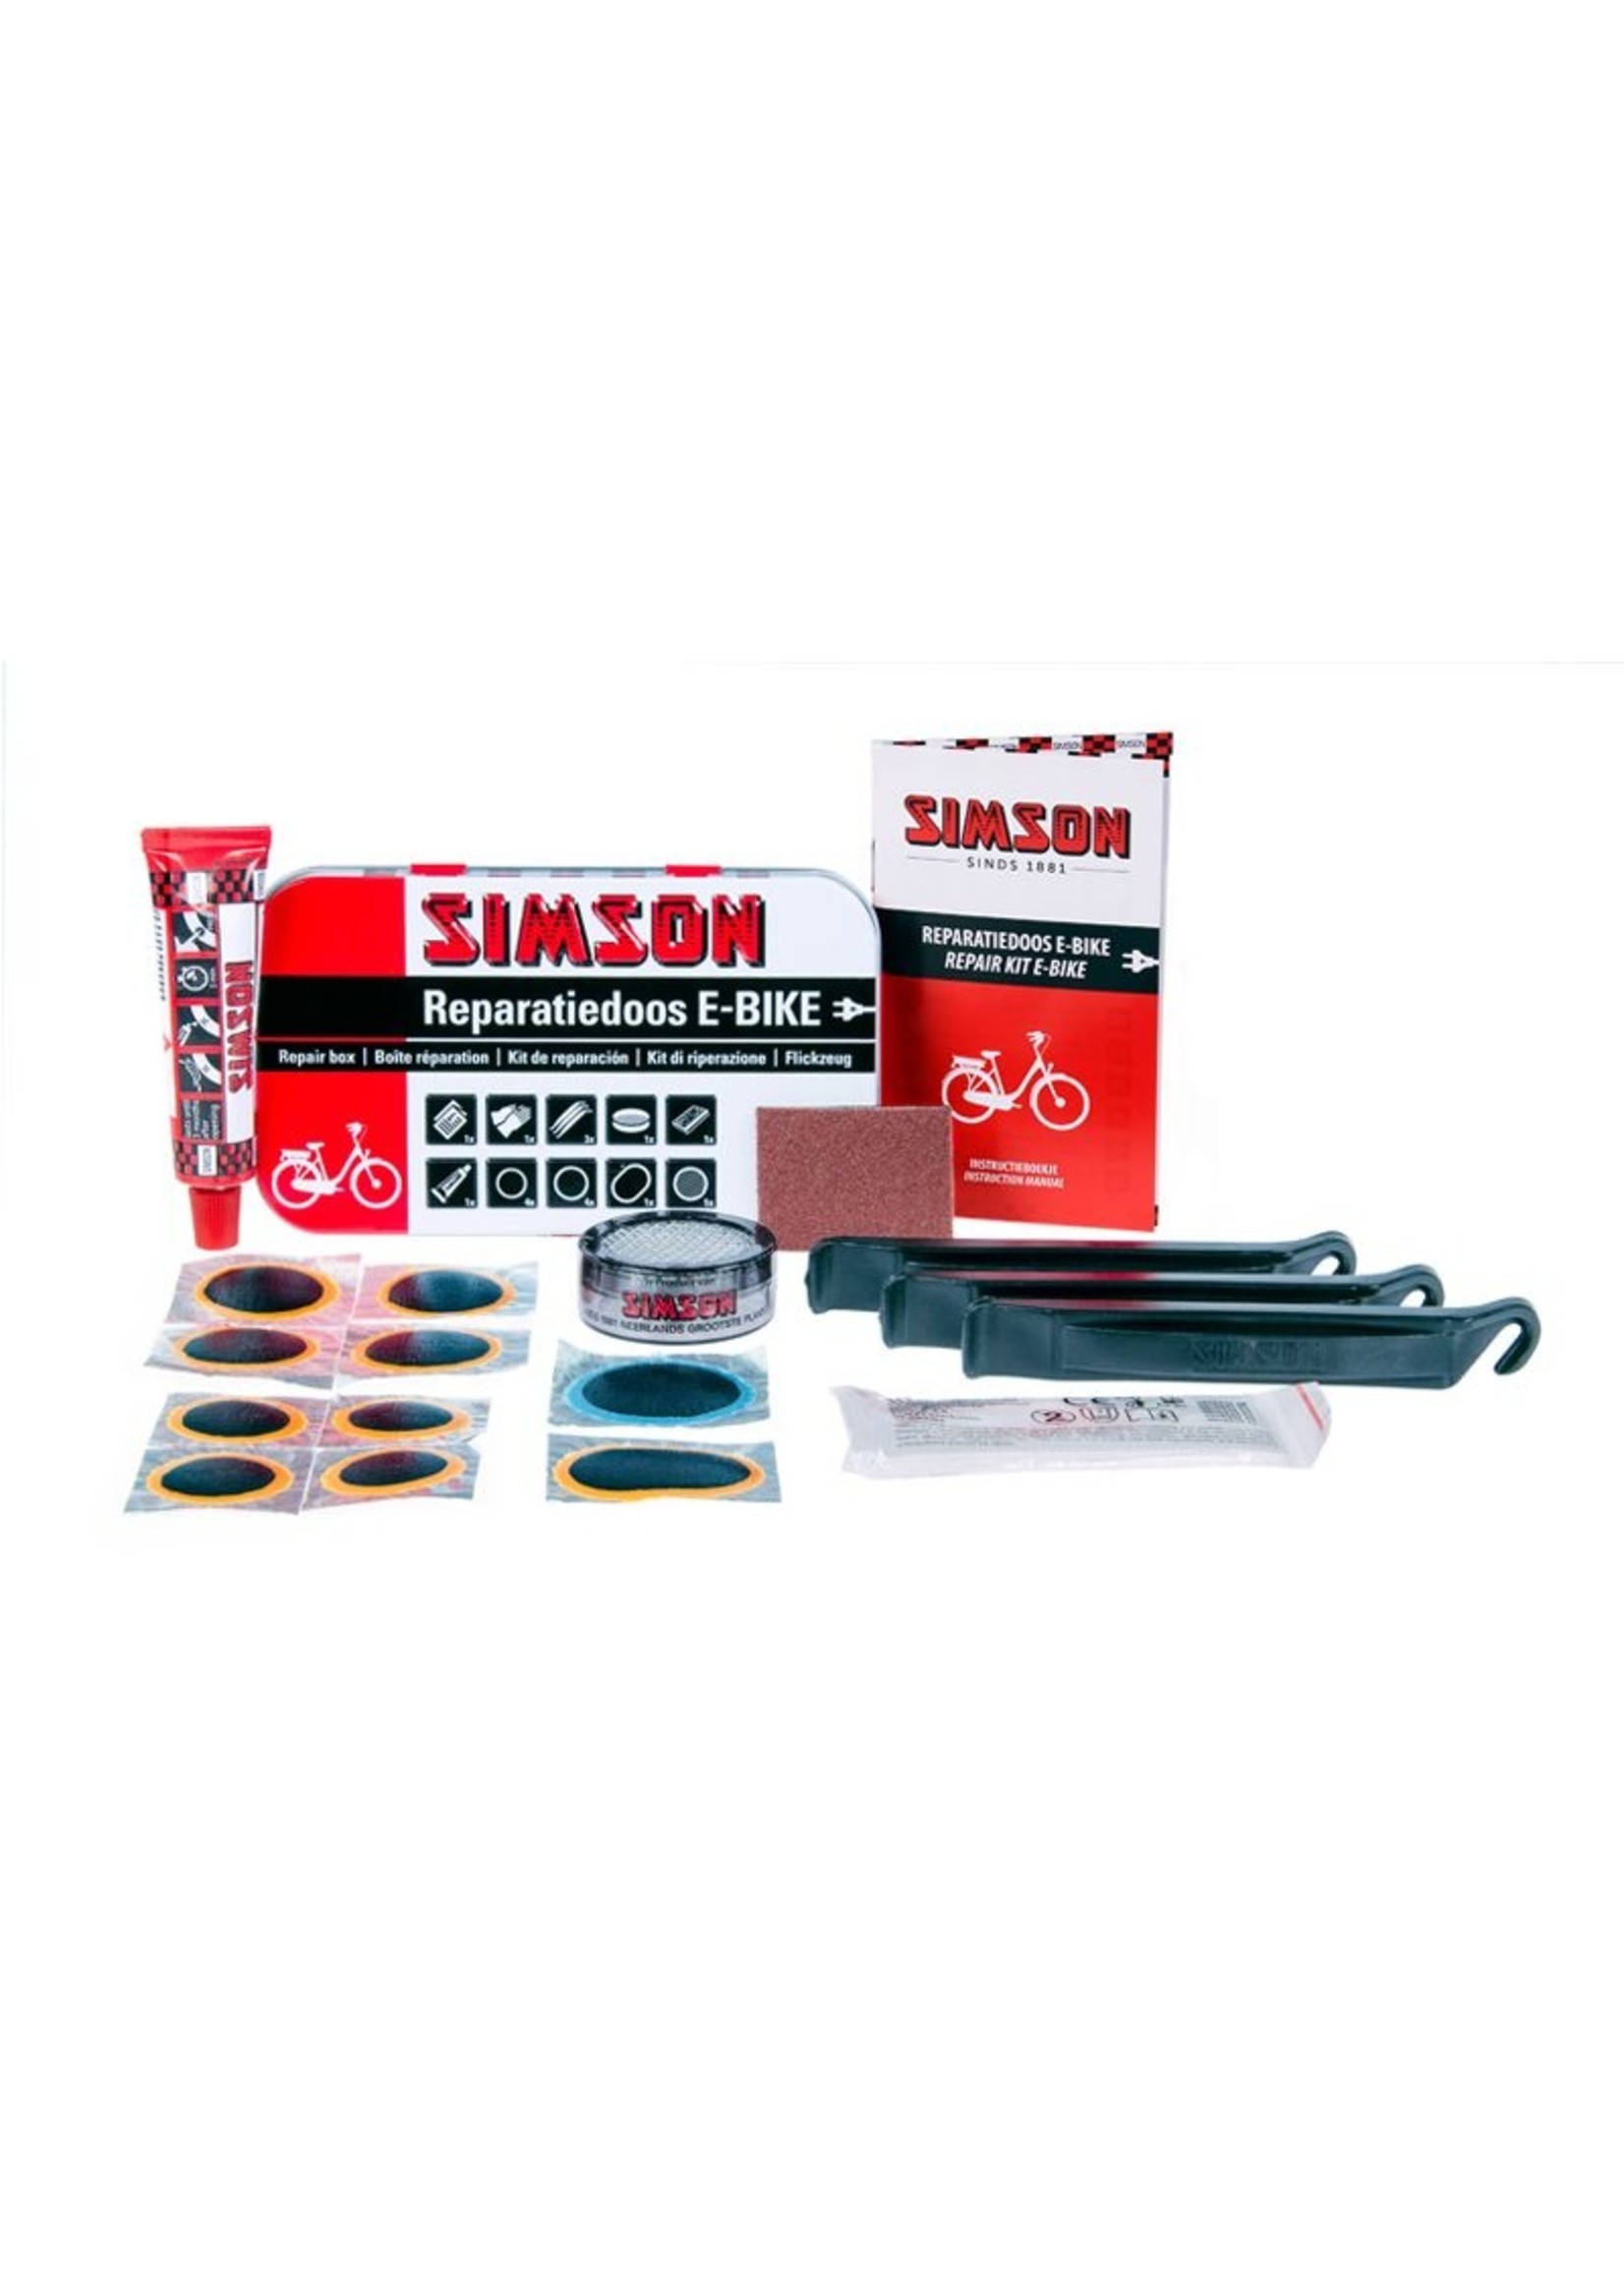 Simson - Repair box E-bike